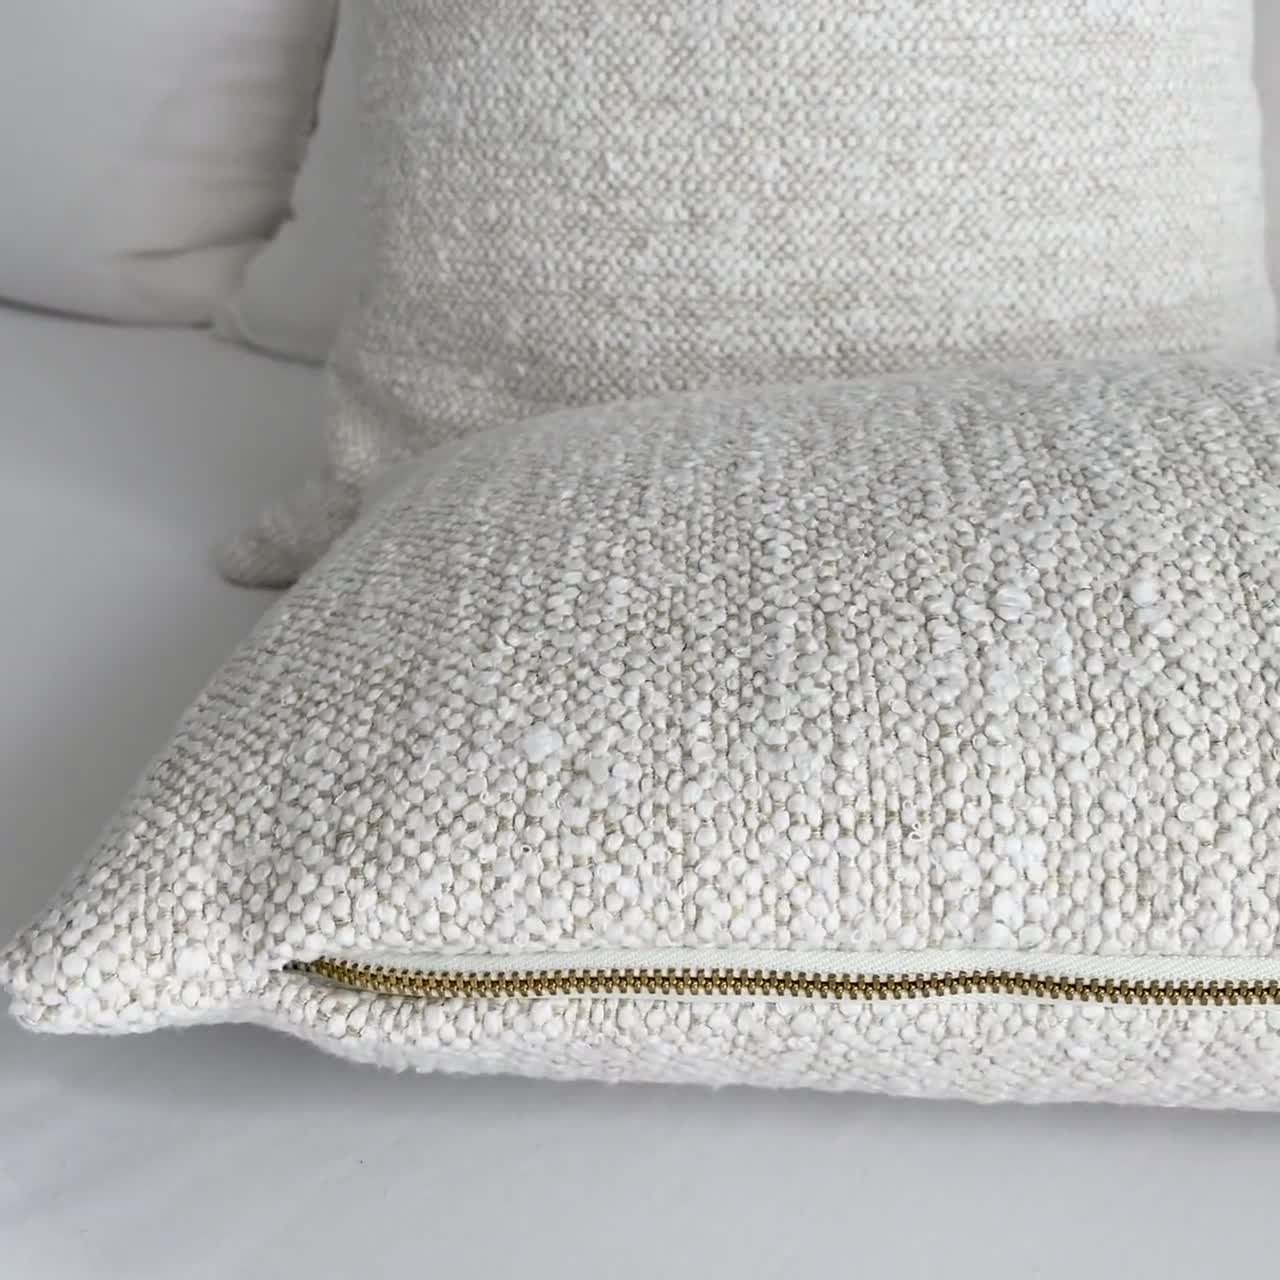 Stain Resistant! Sasso Parchment Neutral Textured Throw Pillow